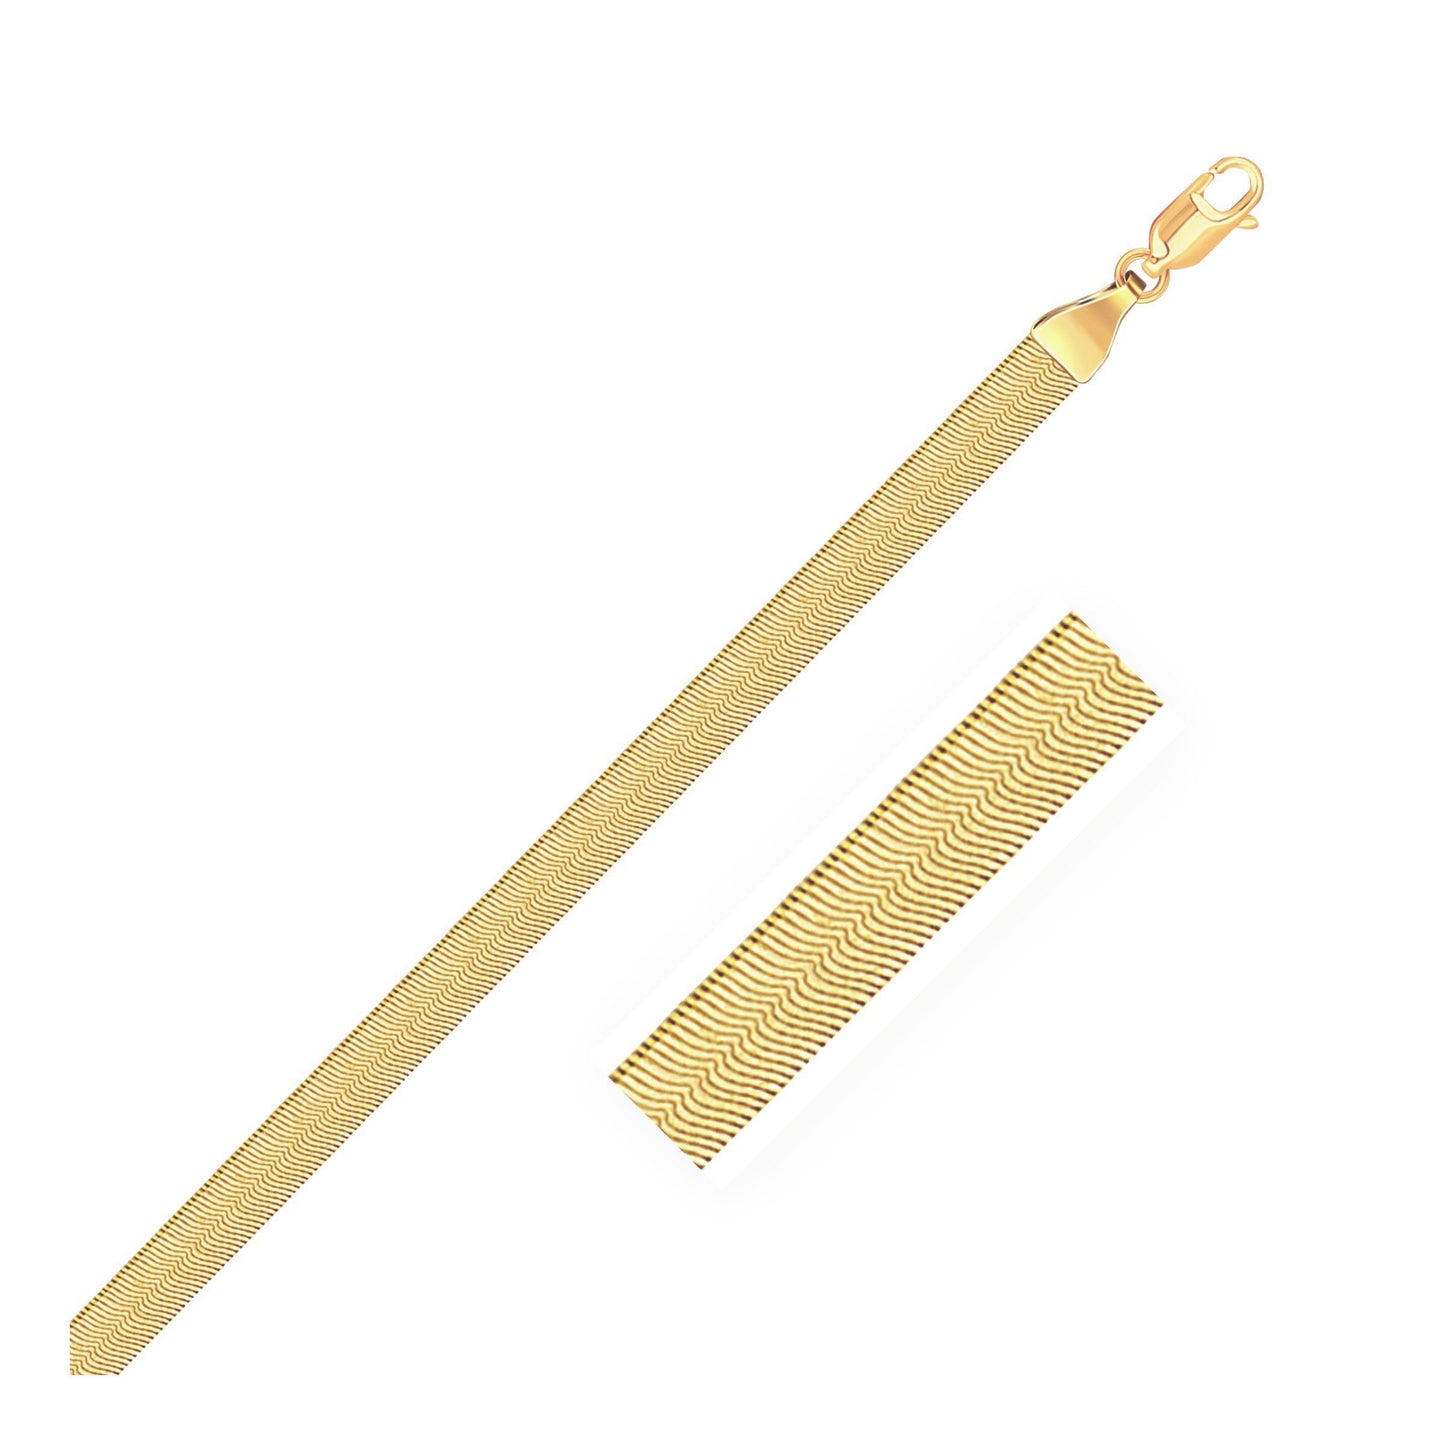 4.0mm 14k Yellow Gold Super Flex Herringbone Bracelet